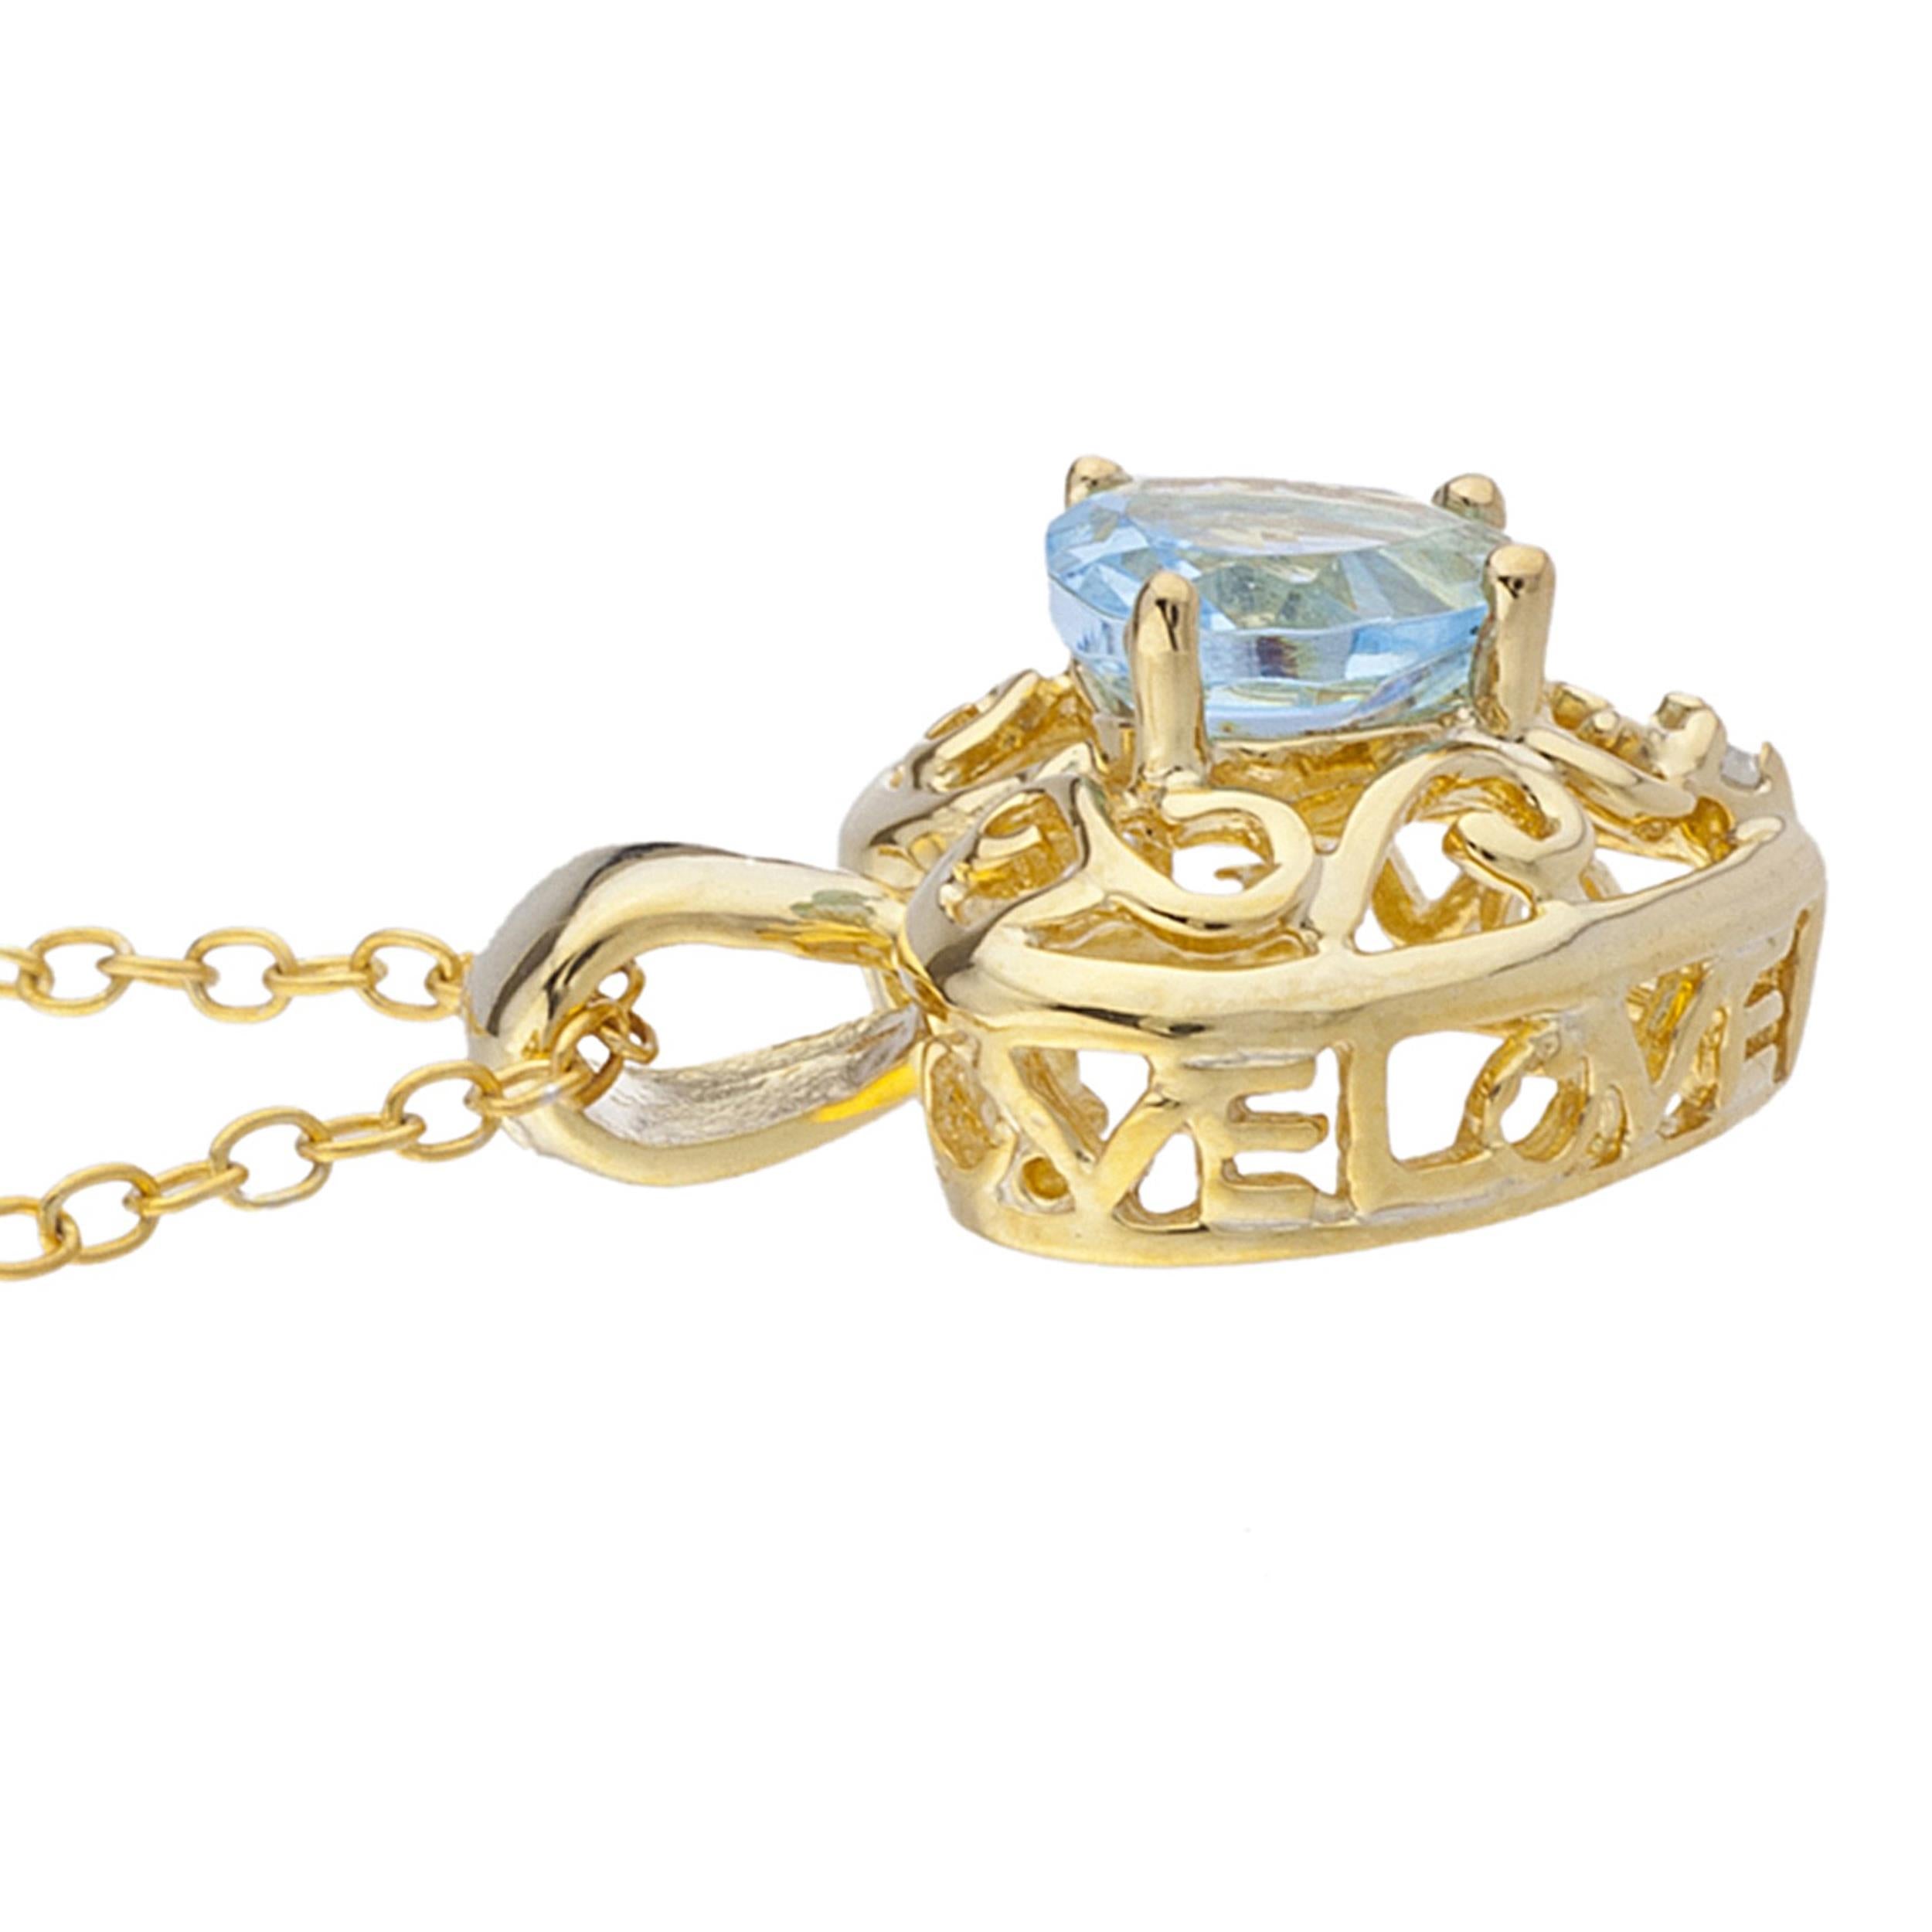 14Kt Gold Blue Topaz & Diamond Heart LOVE ENGRAVED Pendant Necklace